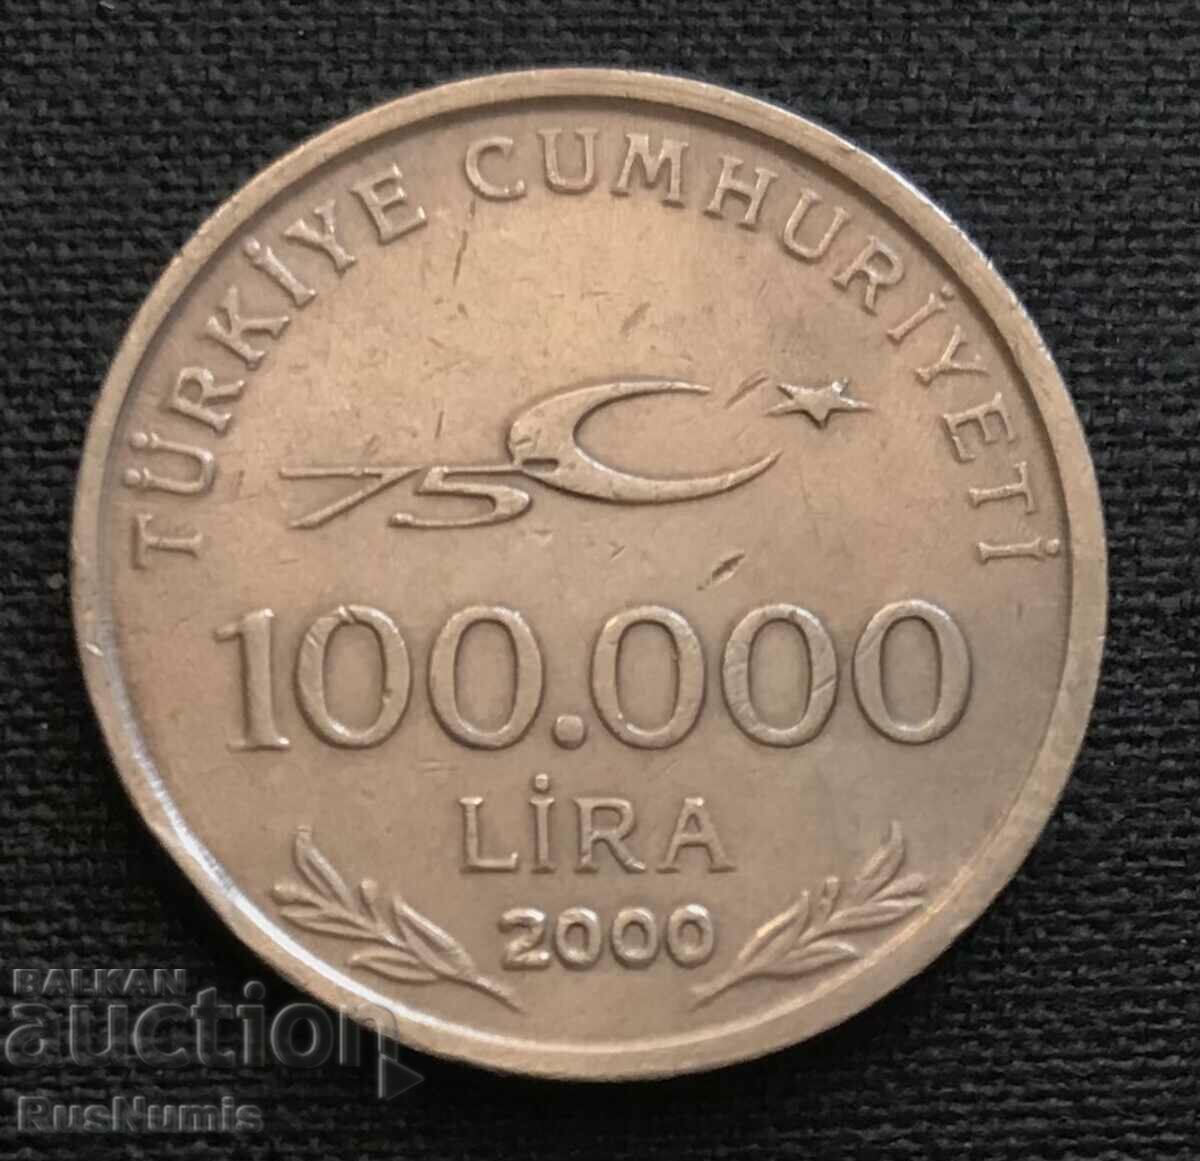 Curcan. 100.000 de lire sterline 2000